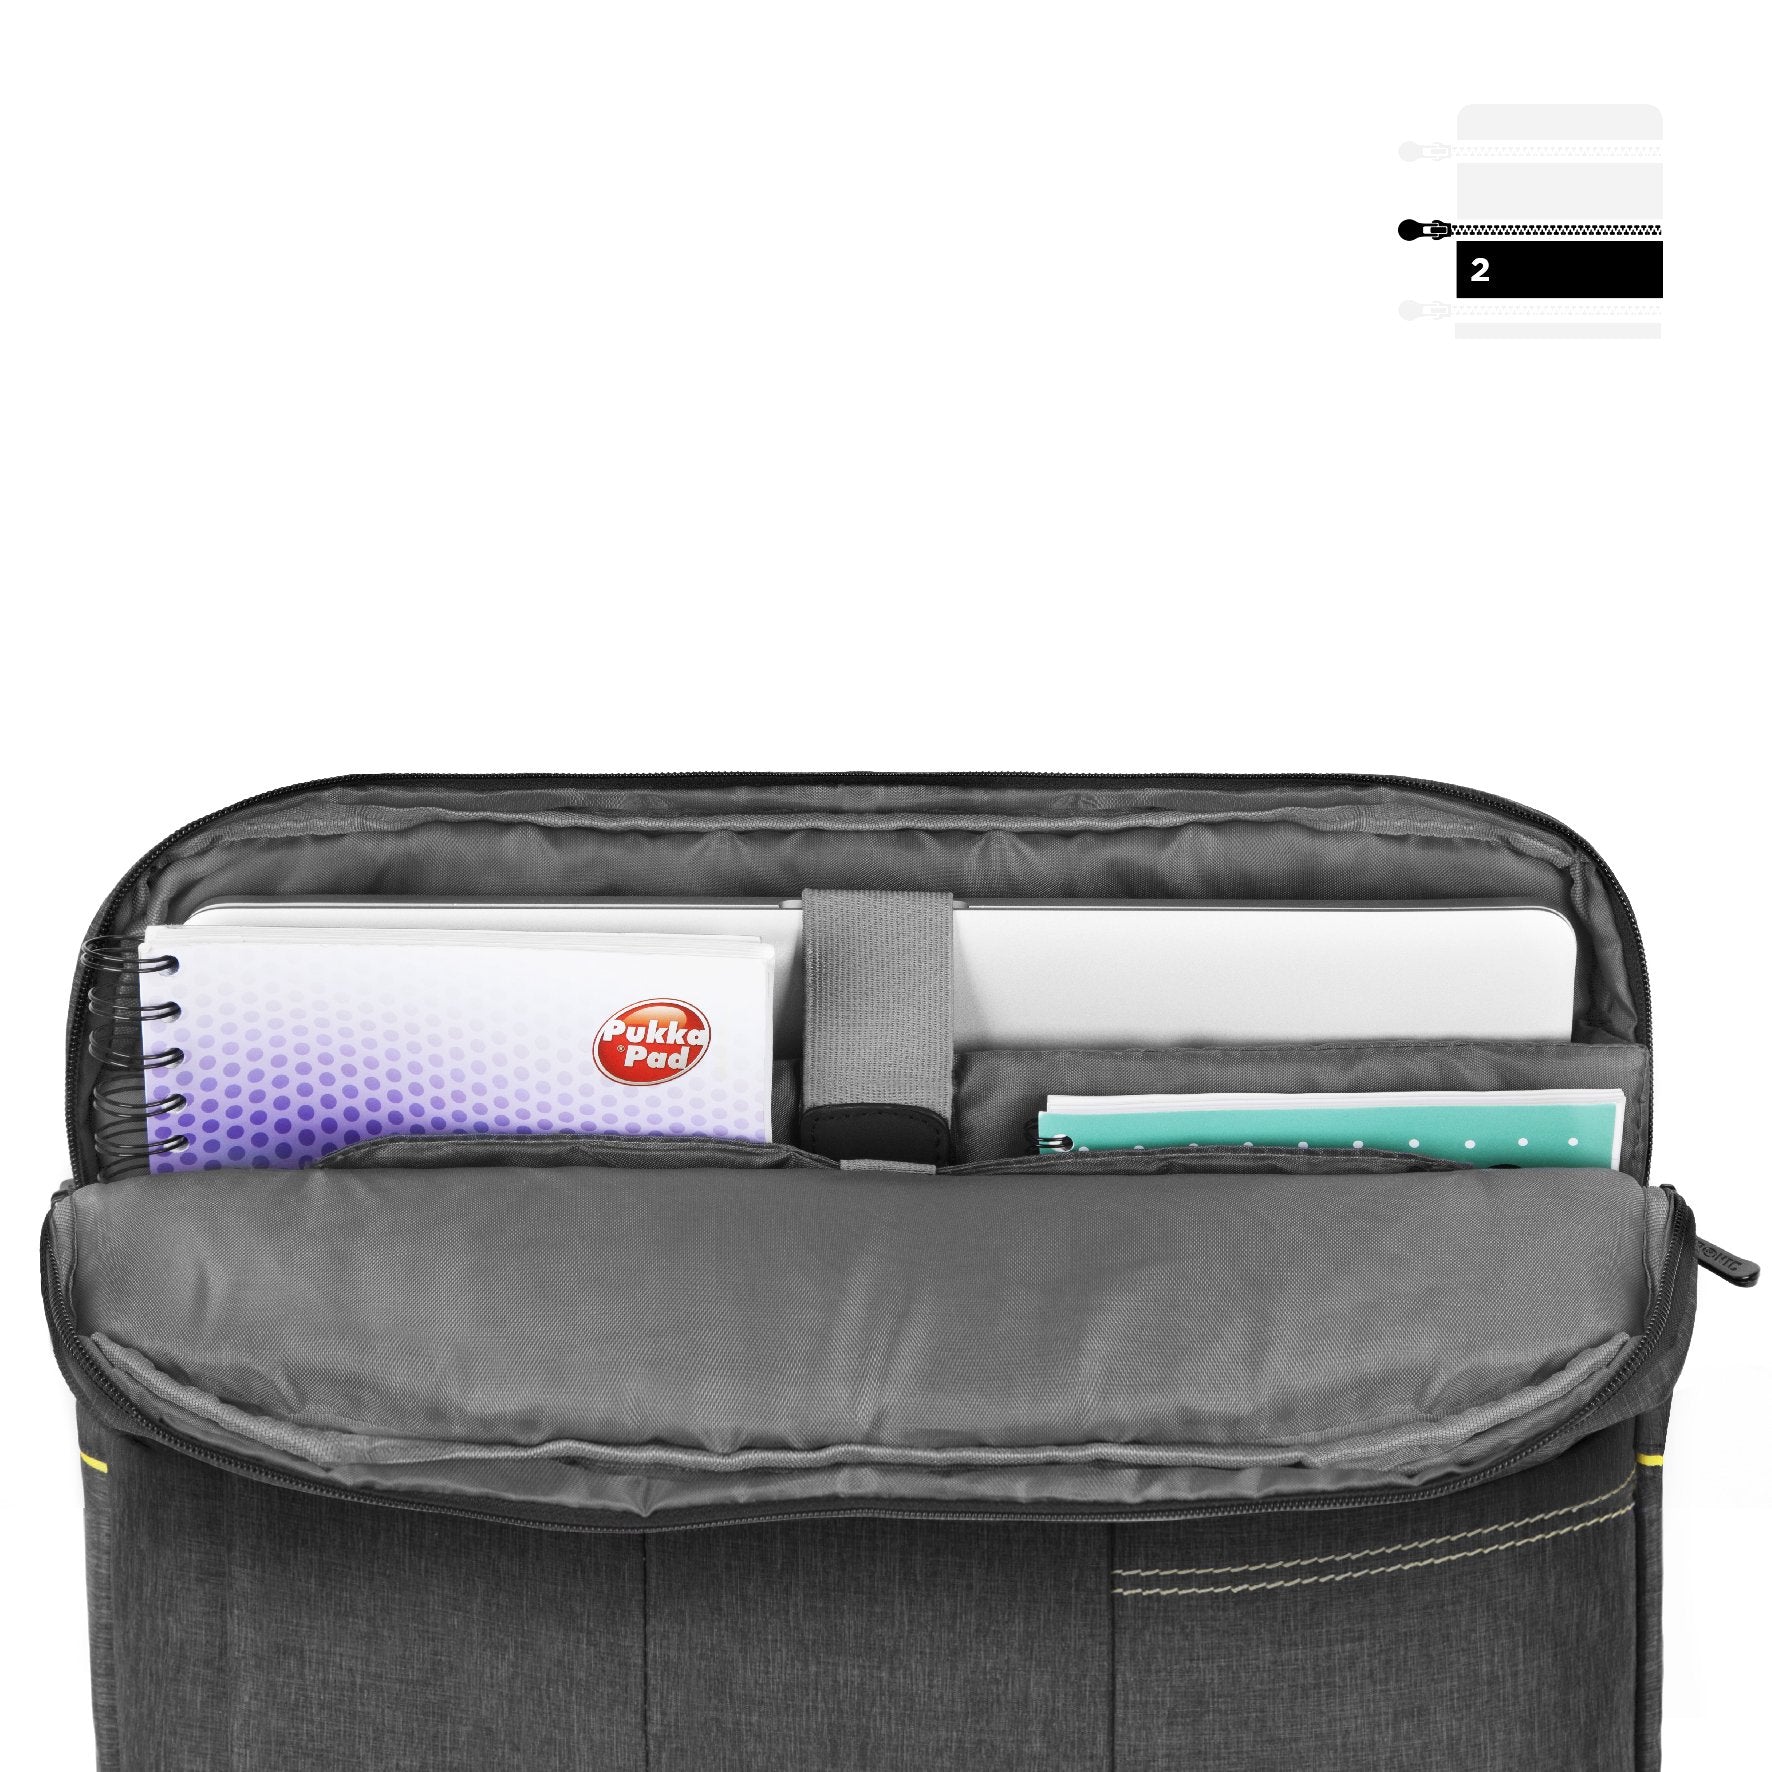 Duronic Travel Laptop Messenger Business Work Shoulder Bag LB14 | University College School MacBook Tablet Case Protector Sleeve | Up to 15.6 Inch Internal Laptop Sleeve | Water Resistant